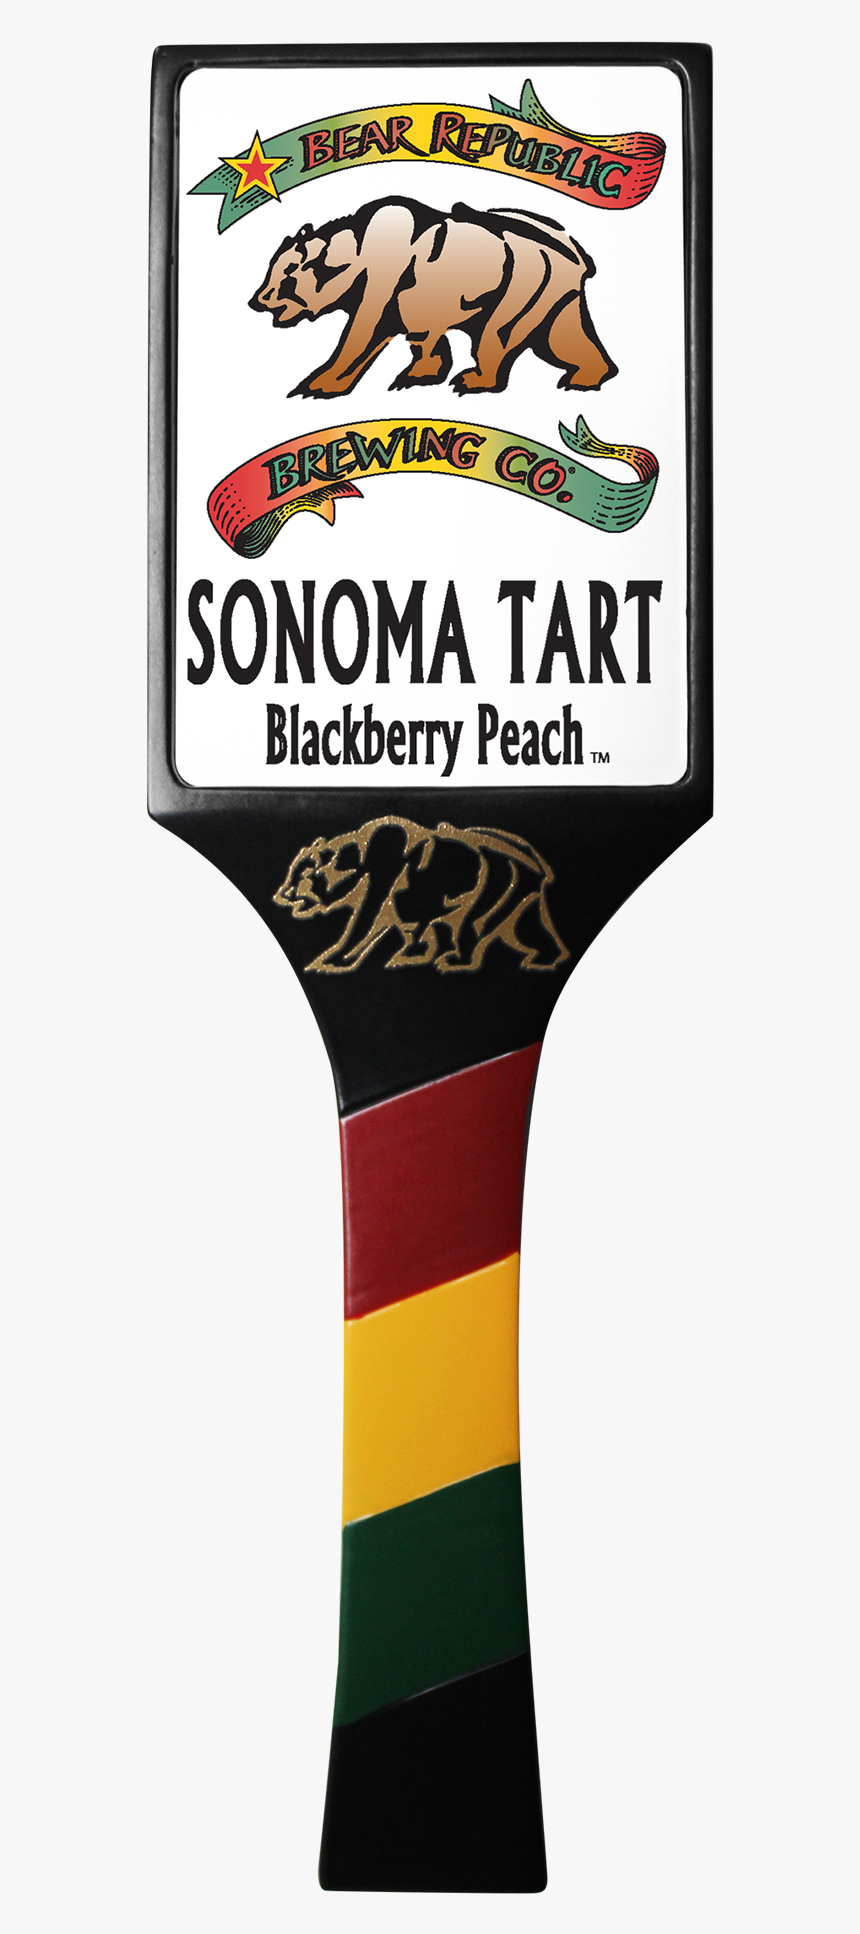 Sonoma Tart Blackberry Peach - Bear Republic Brewing, HD Png Download, Free Download